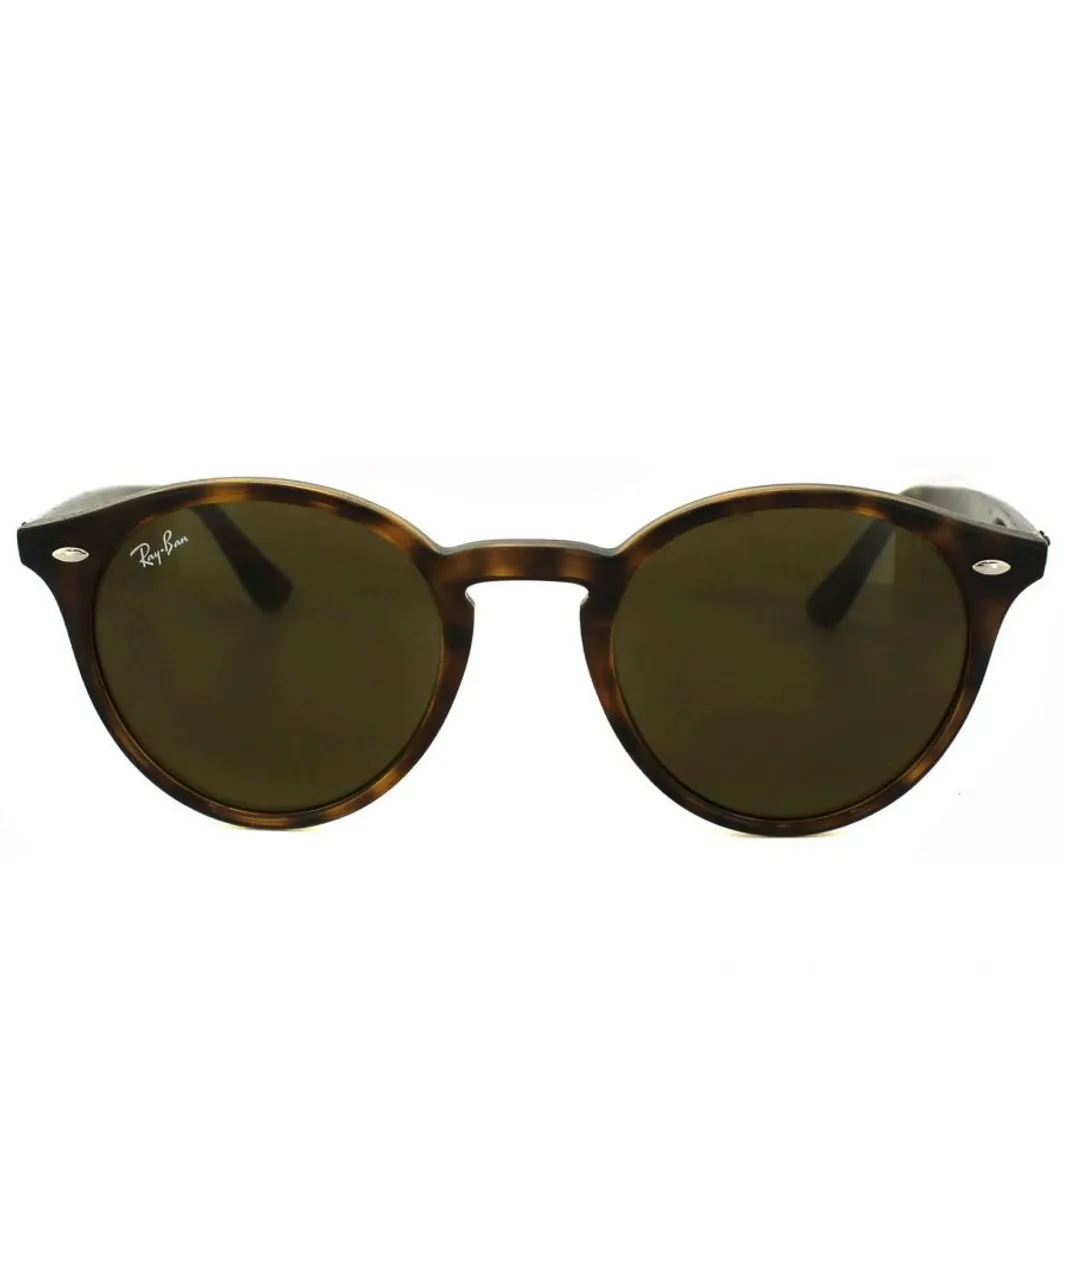 Ray-Ban Unisex Sunglasses 2180 710/73 Tortoise Brown B-15 51mm - One